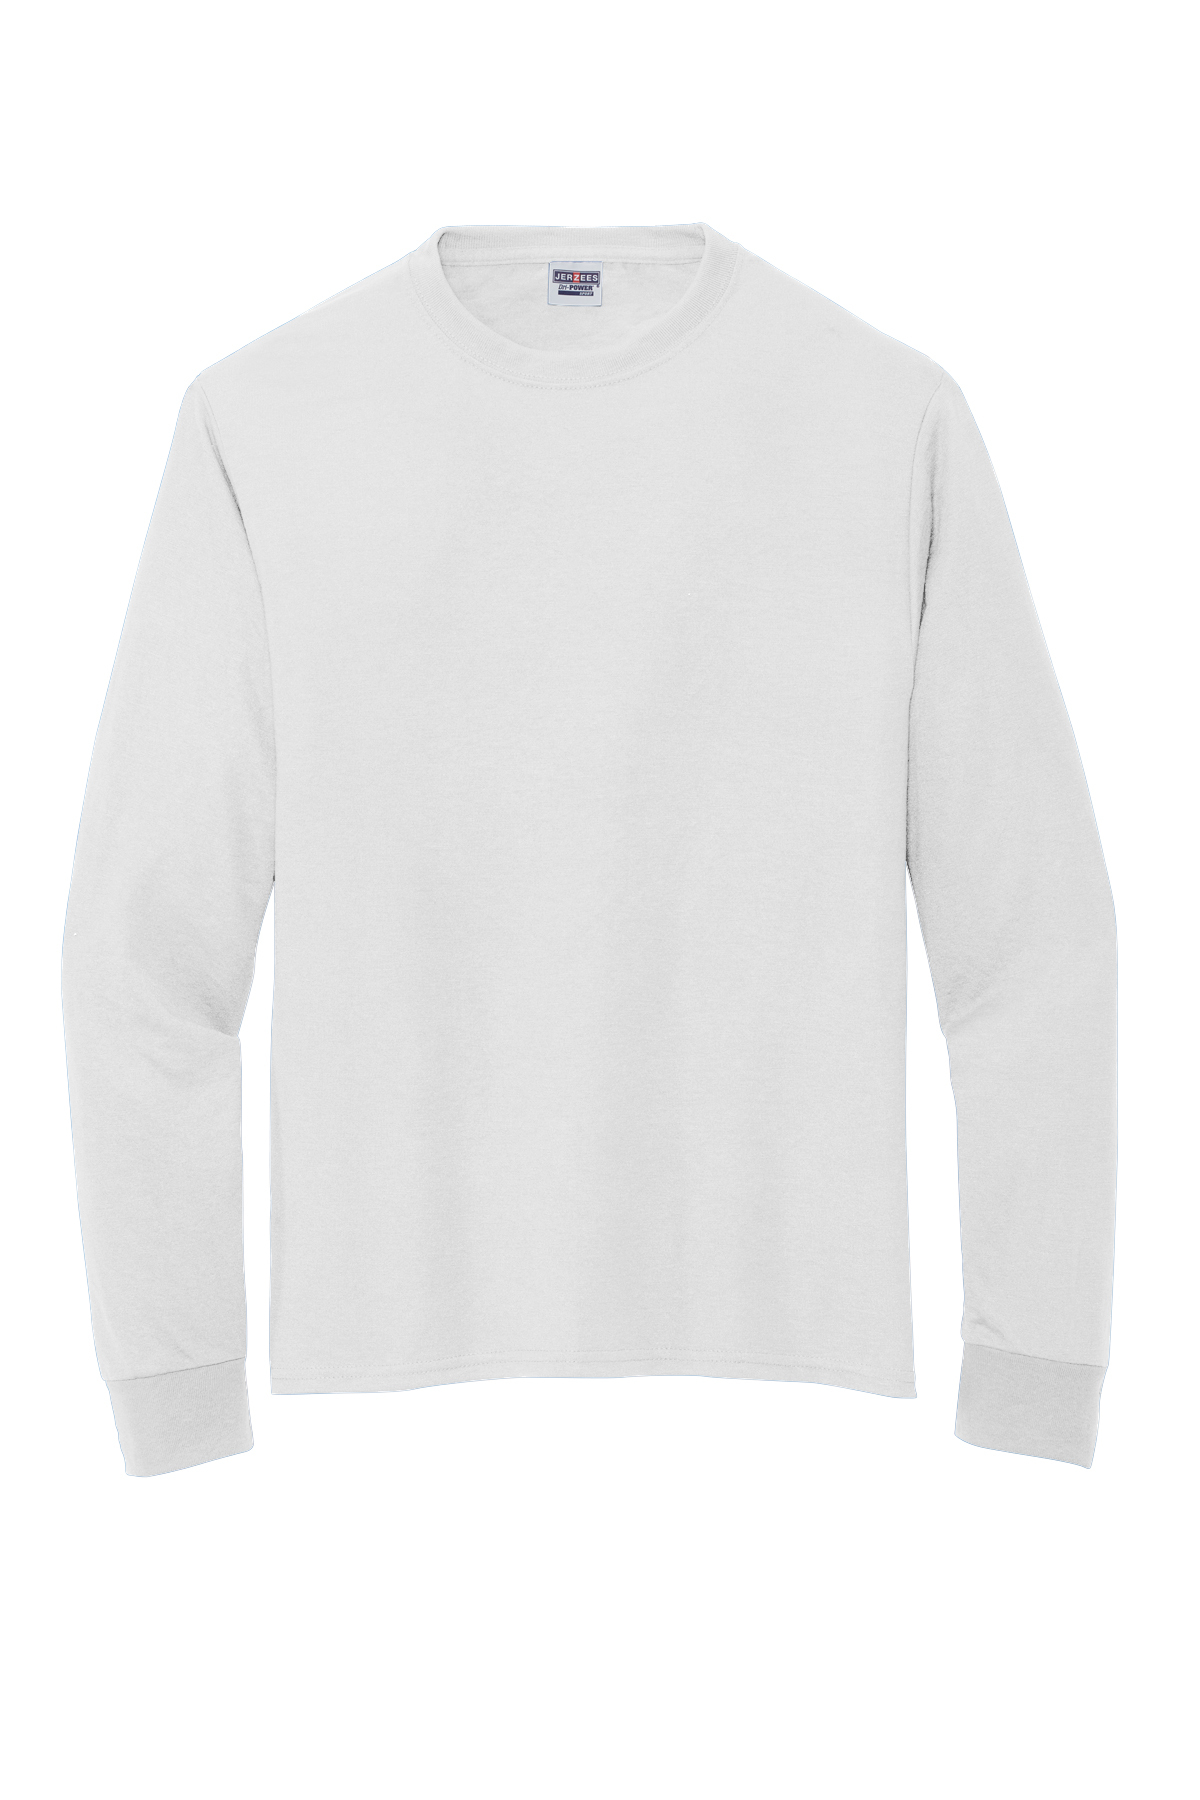 JERZEES Dri-Power 100% Polyester Long Sleeve T-Shirt | Product | SanMar